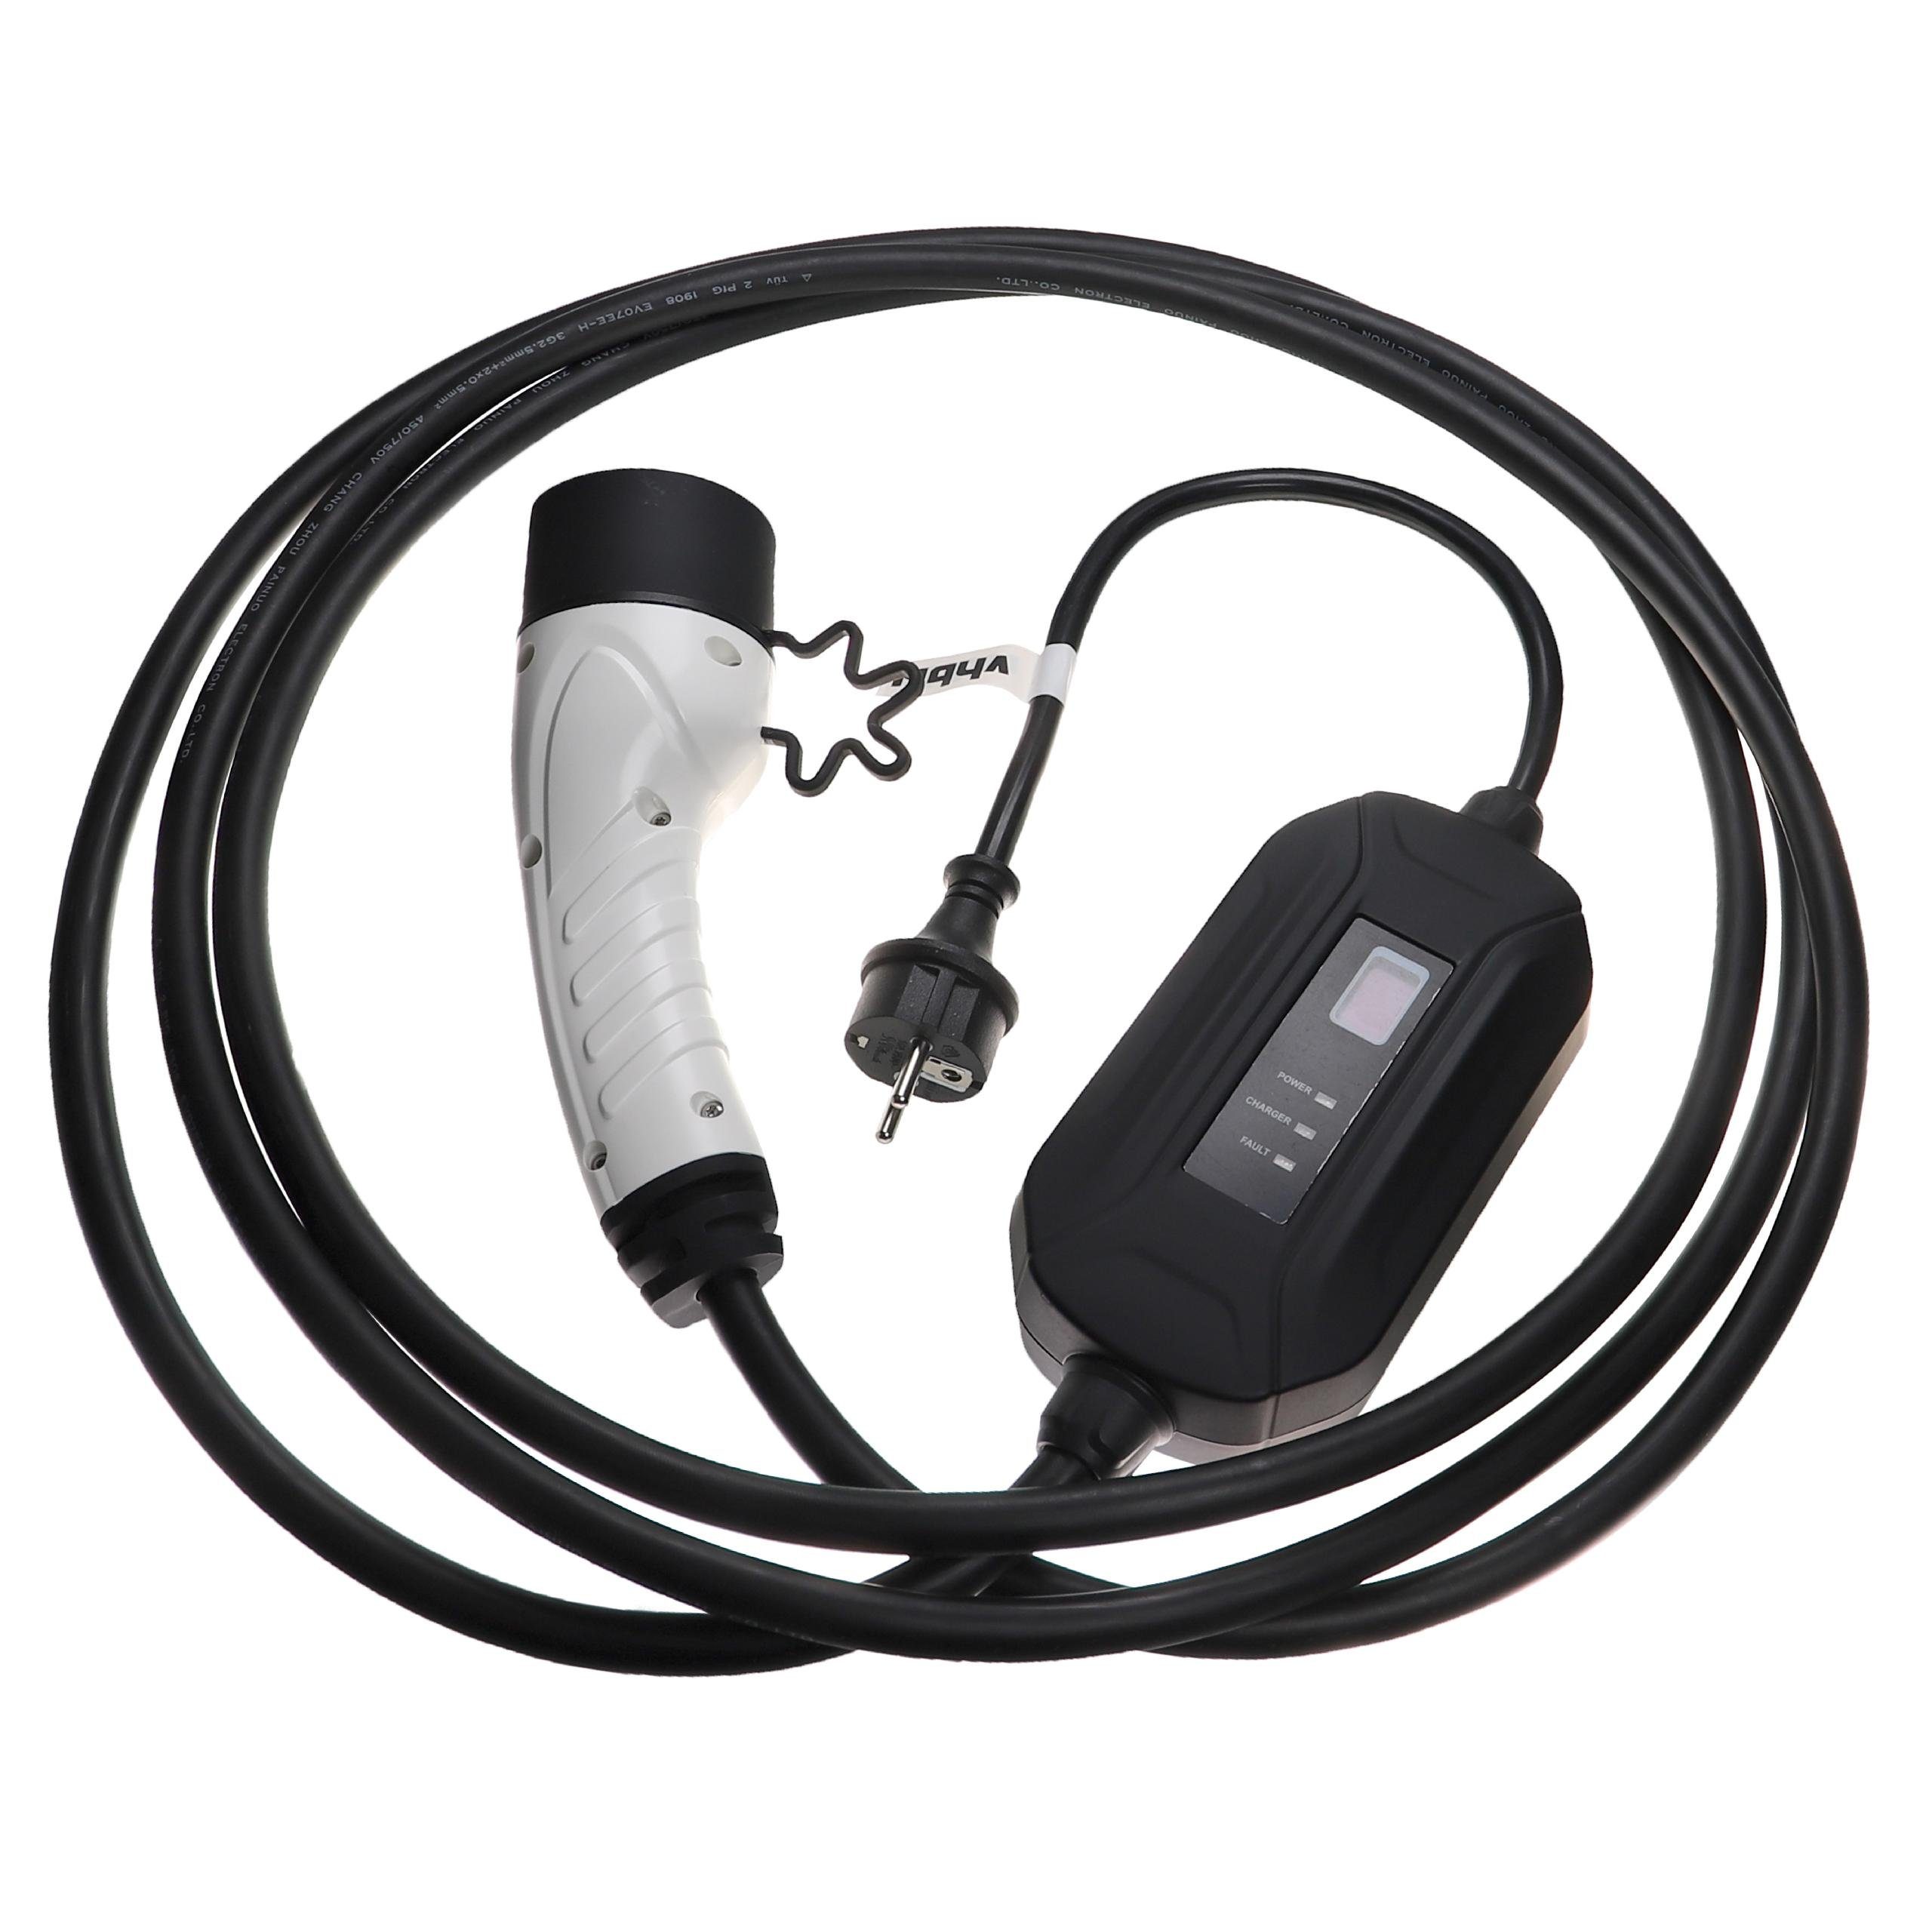 Elektro-Kabel / vhbw Tourneo Ford Custom für passend Elektroauto Plug-in-Hybrid